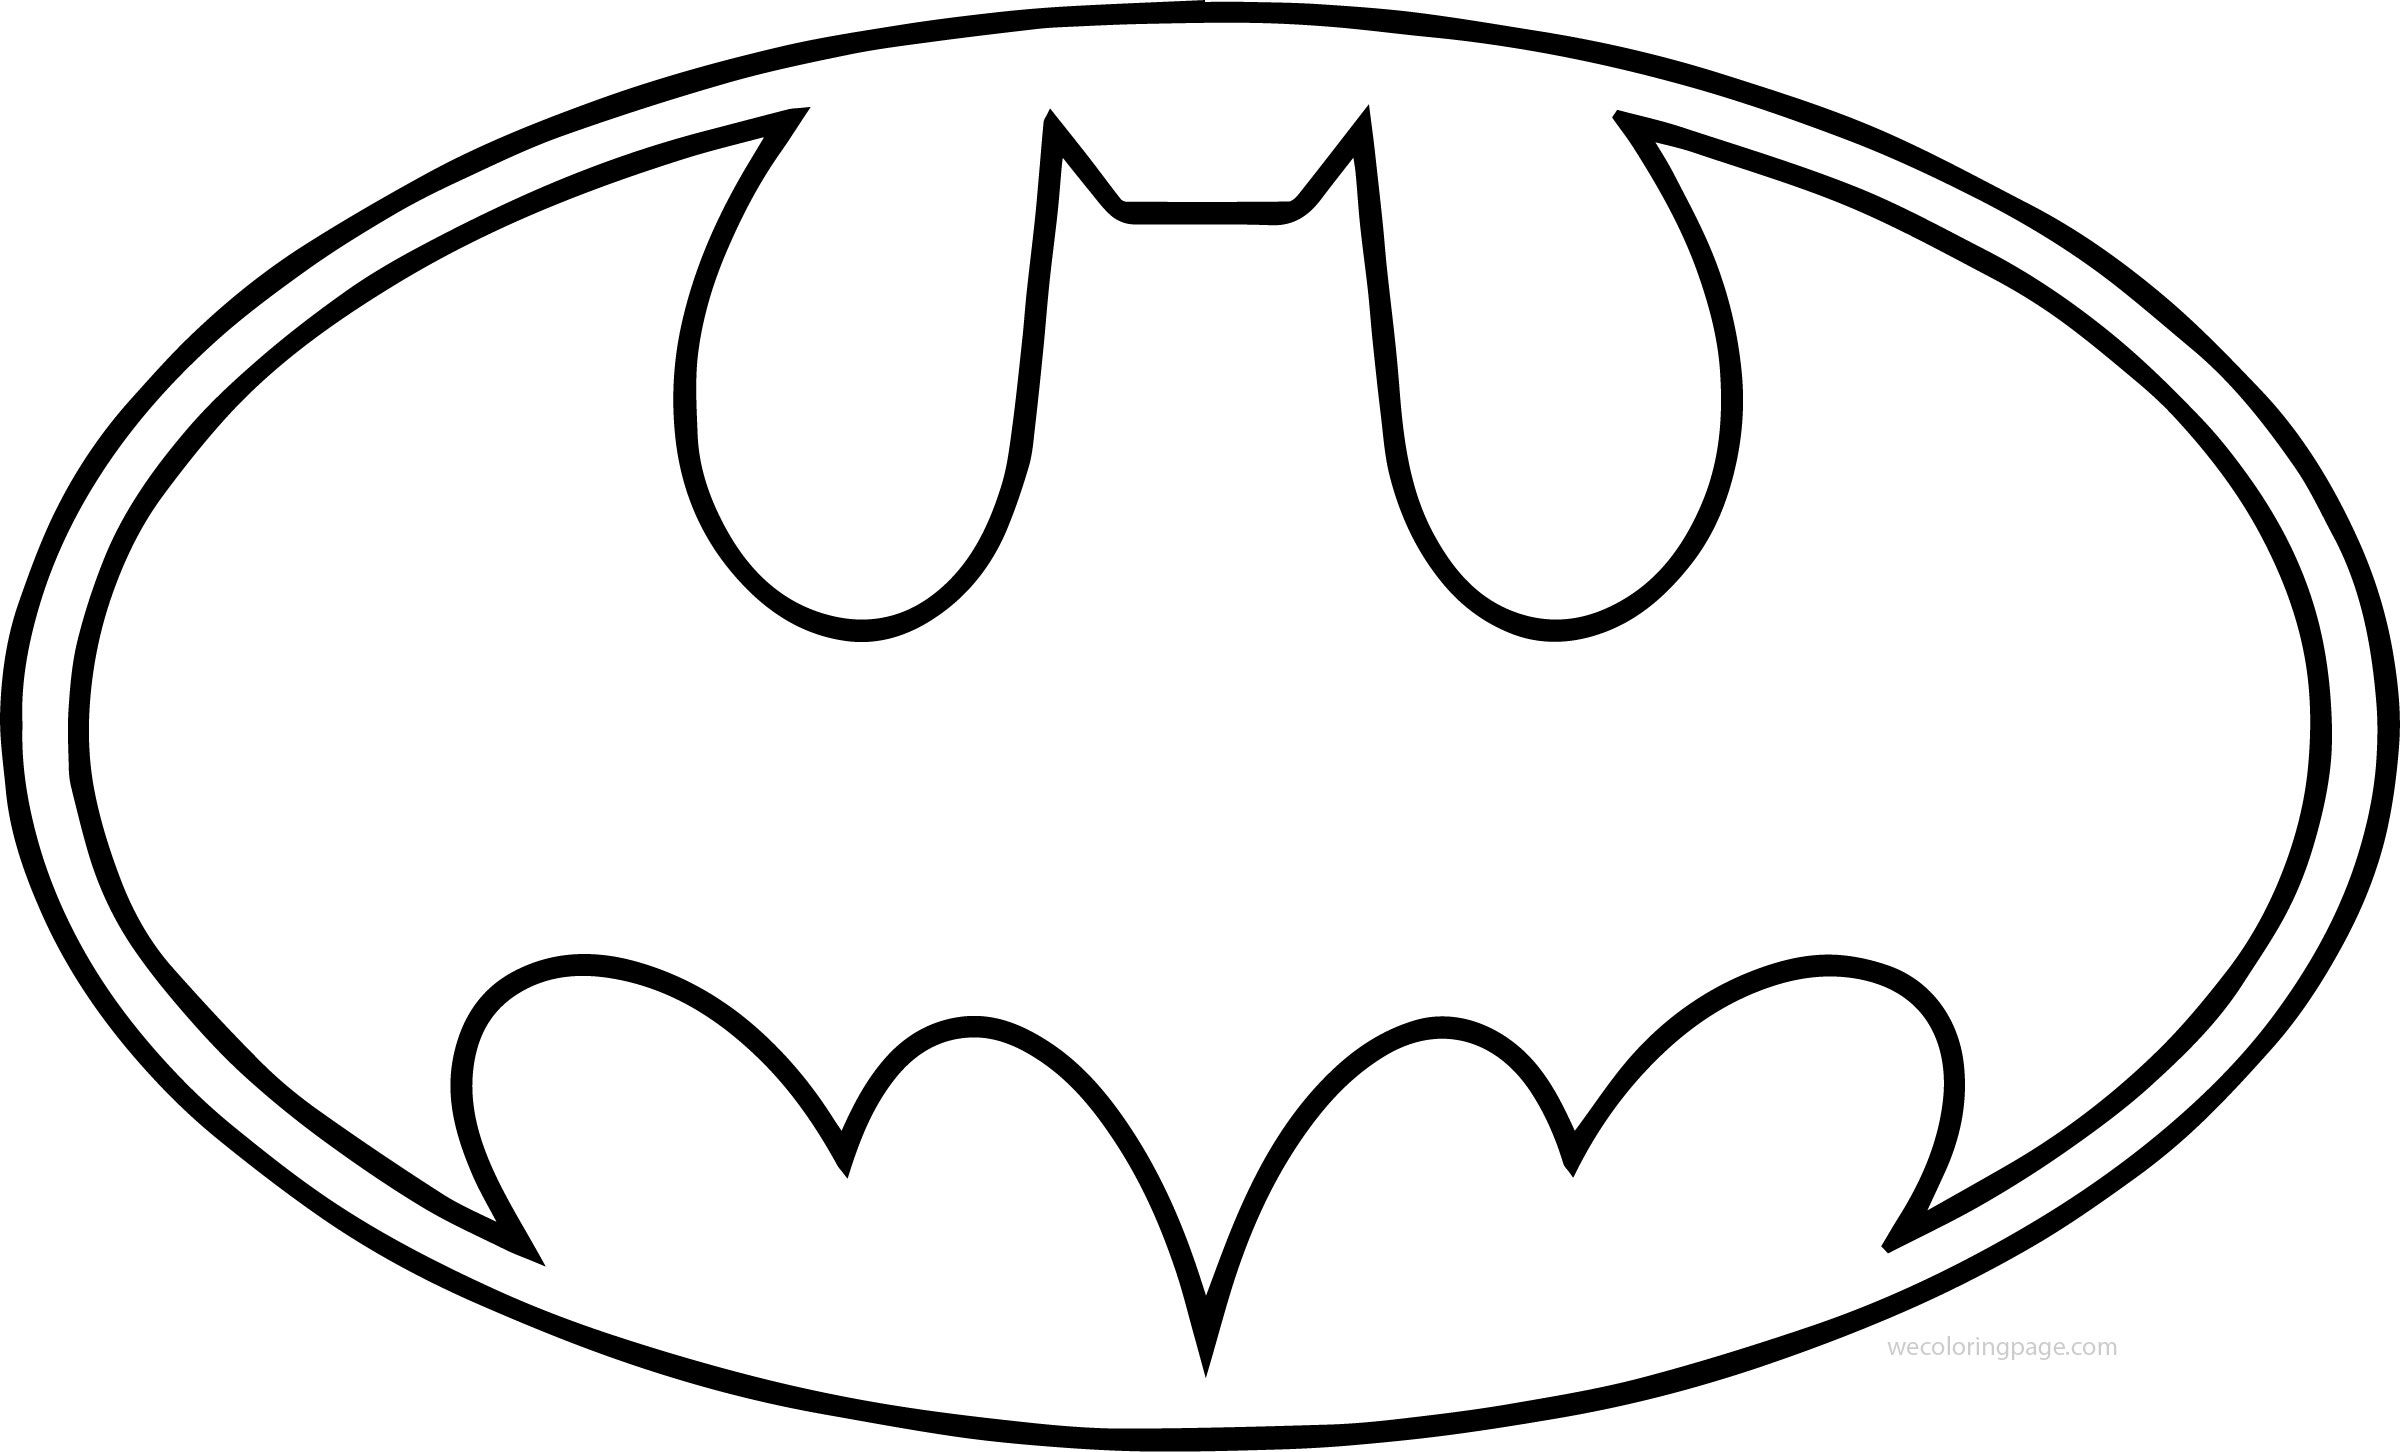 Outline Batman Logo Coloring Page | Wecoloringpage.com